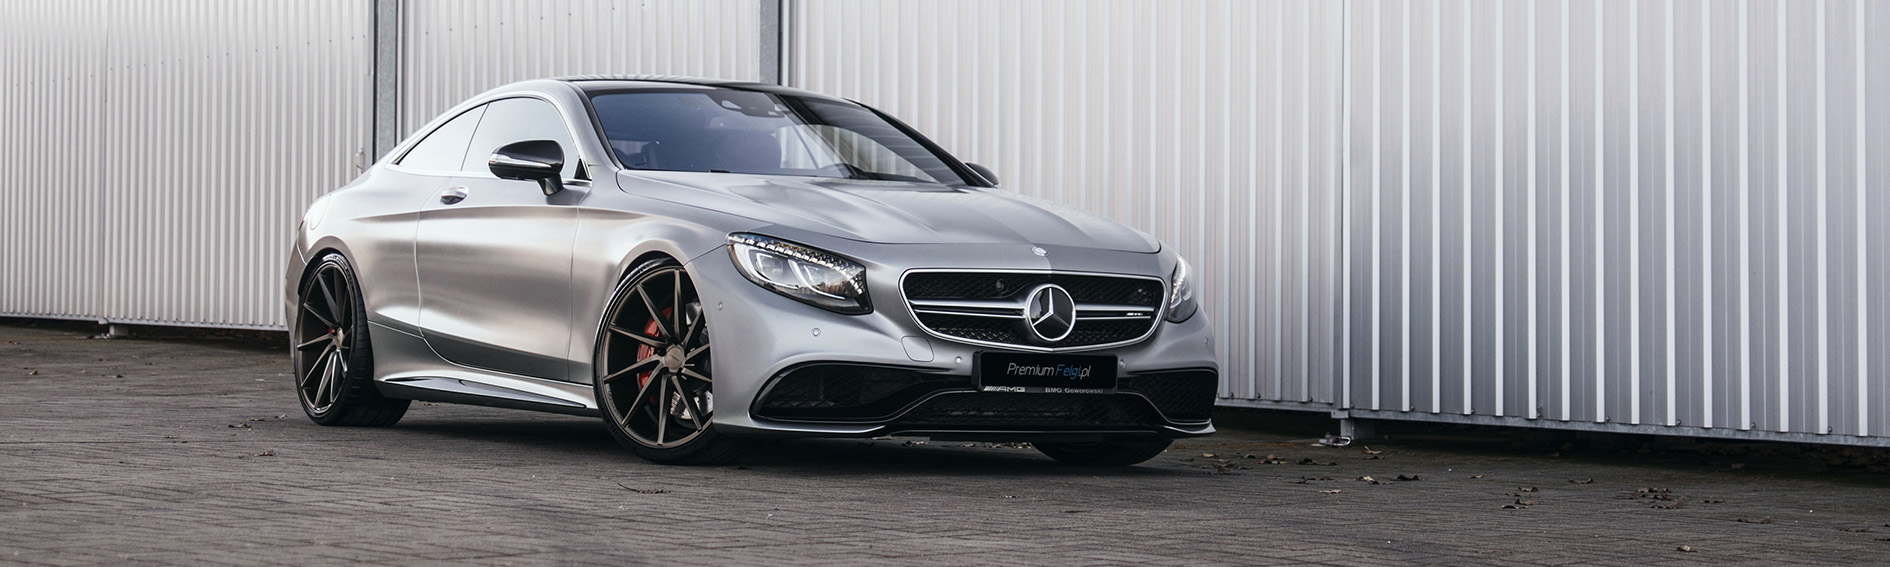 Realizacje - PremiumFelgi.pl Mercedes-AMG S63 Coupé | Vossen CVT - PremiumFelgi